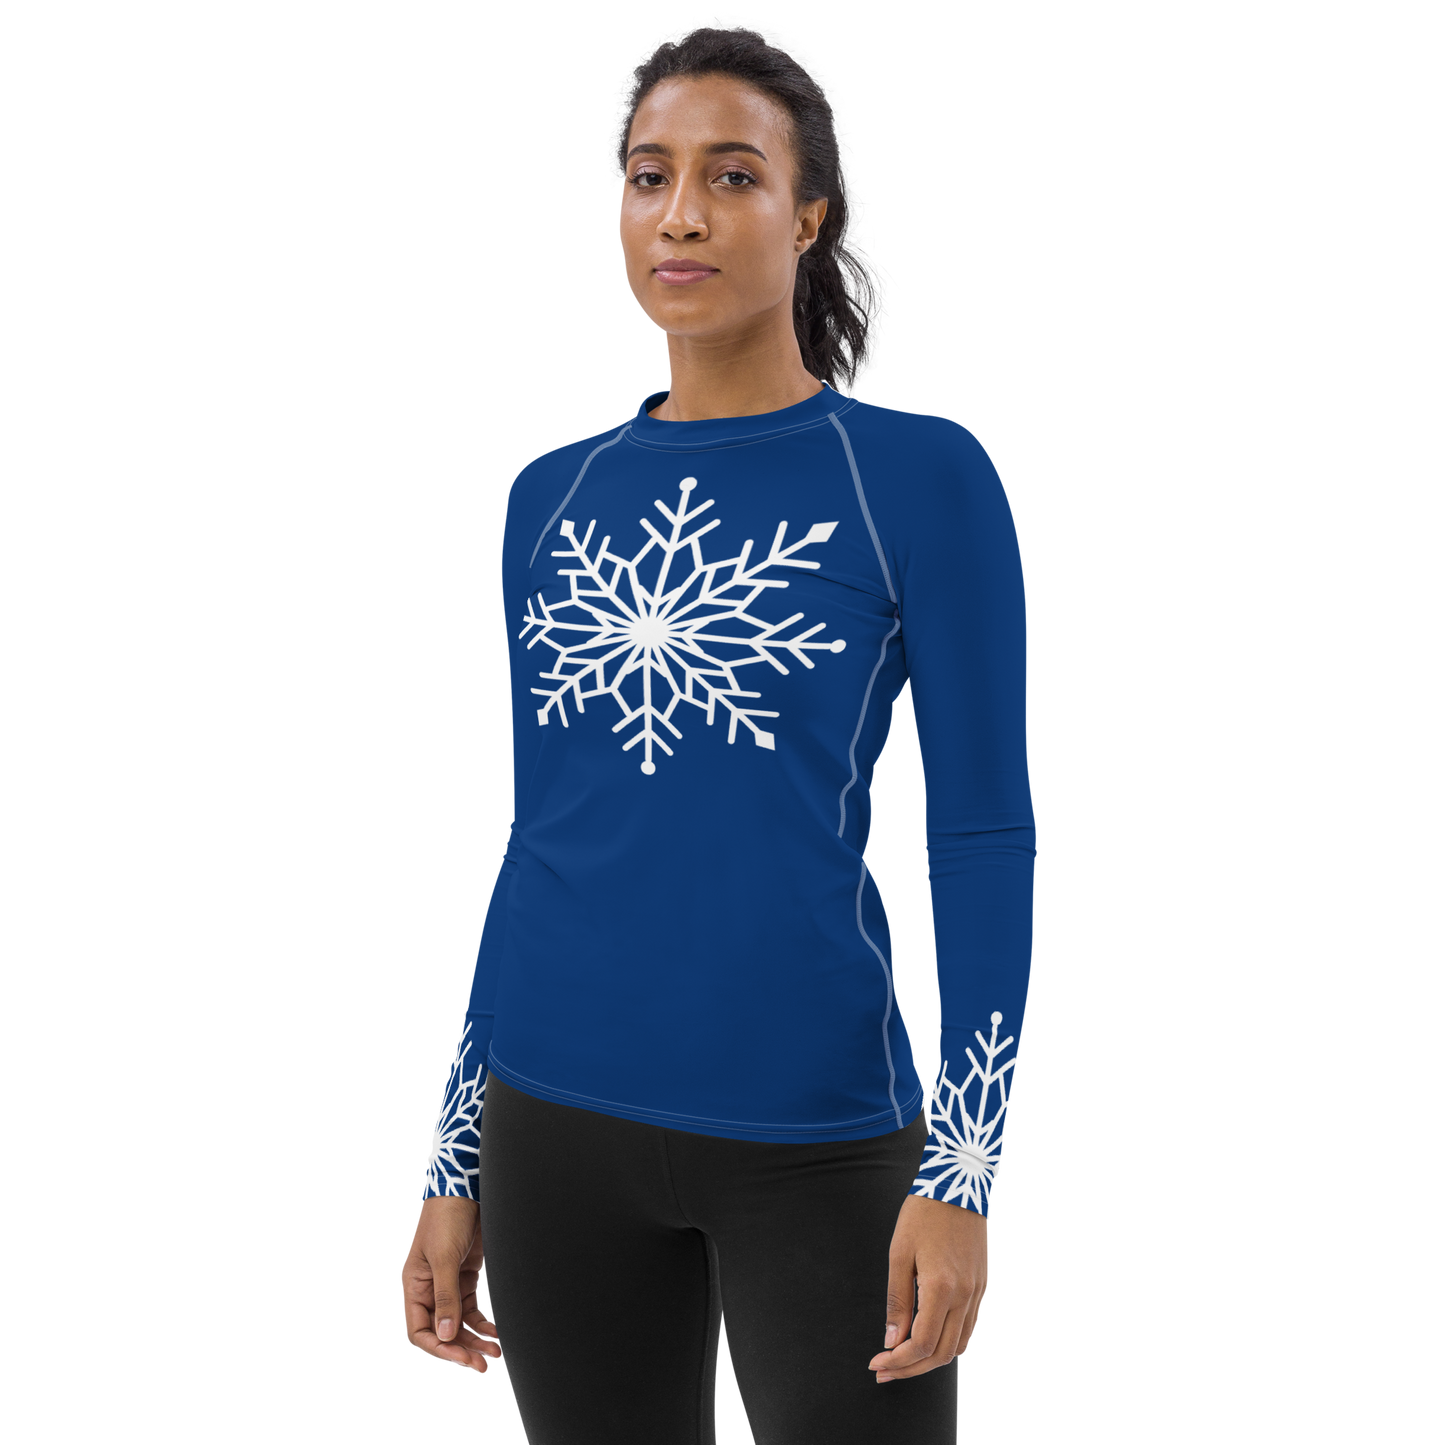 Winter Snowflake Top, White Snowflake on Royal Blue Women's Rash Guard, Holiday Top